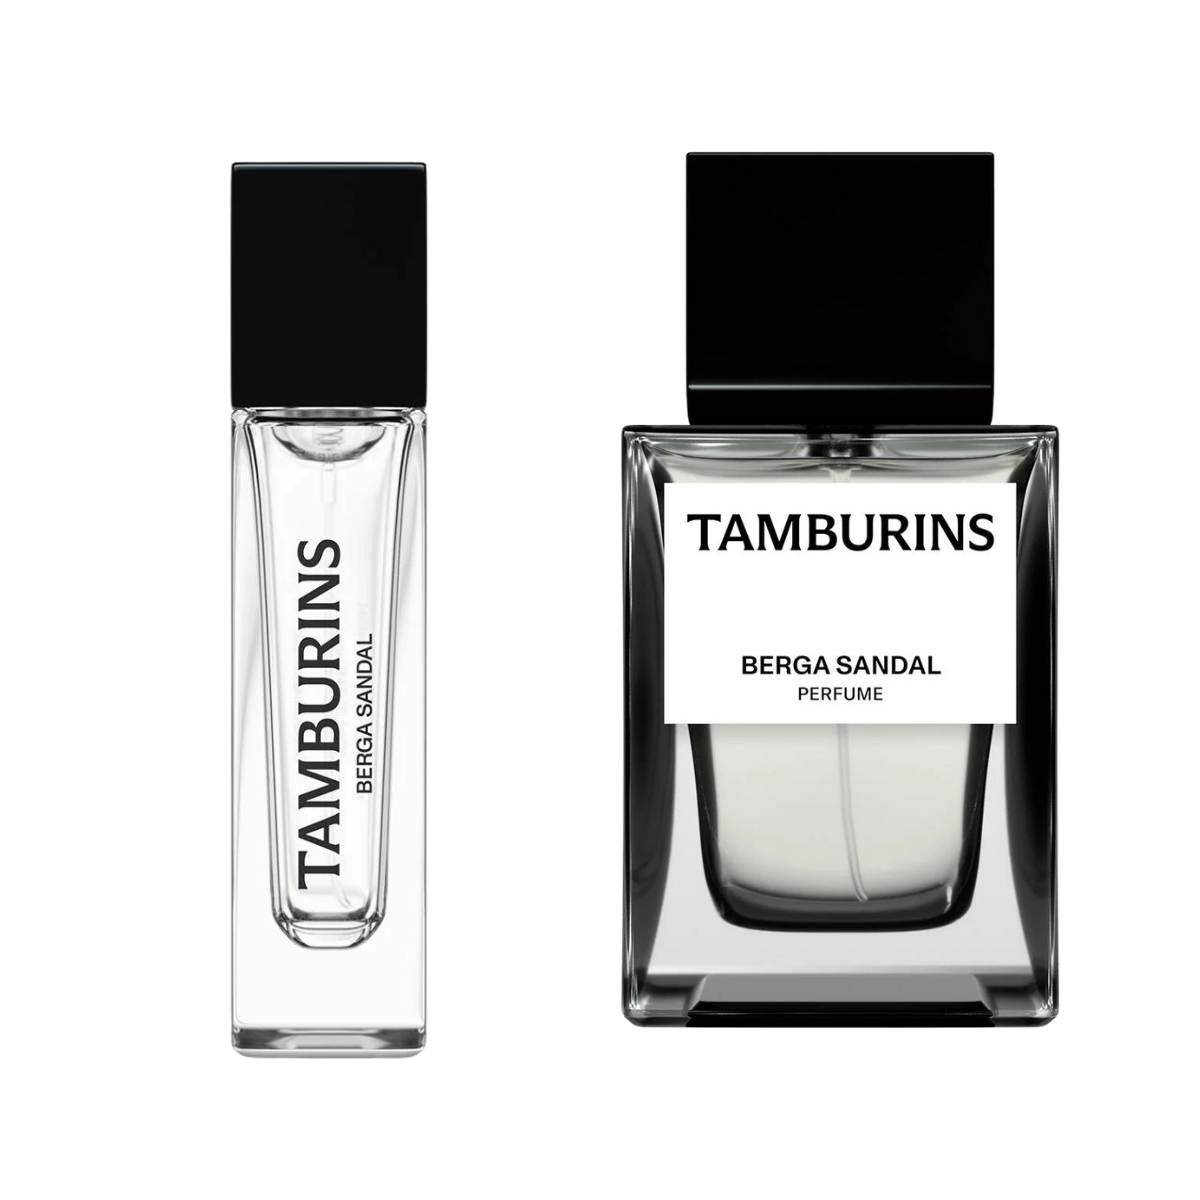 A bottle of TAMBURINS men's cologne and perfume, labeled as TAMBURINS Perfume #BERGA SANDAL 11ml / 50ml.